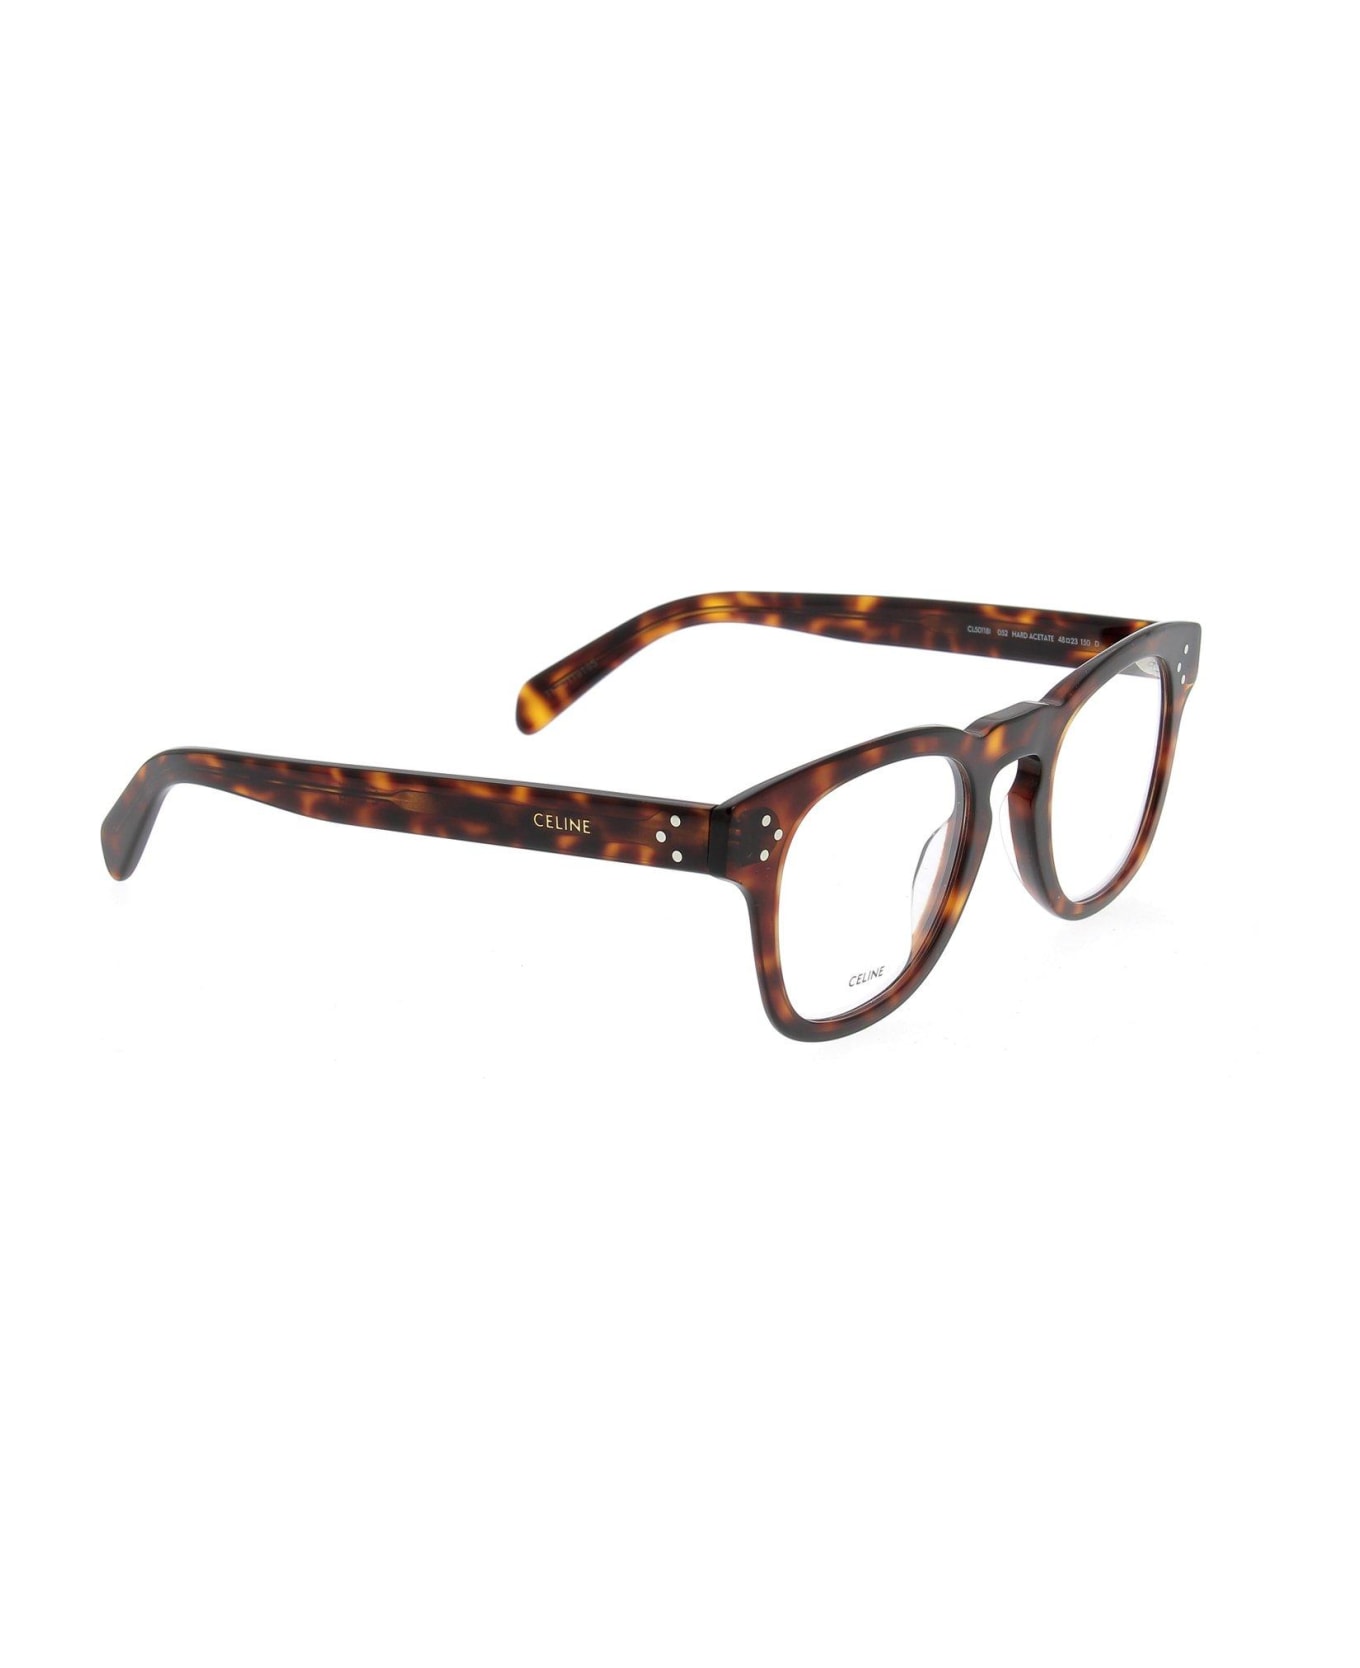 Celine Square Frame Glasses - 052